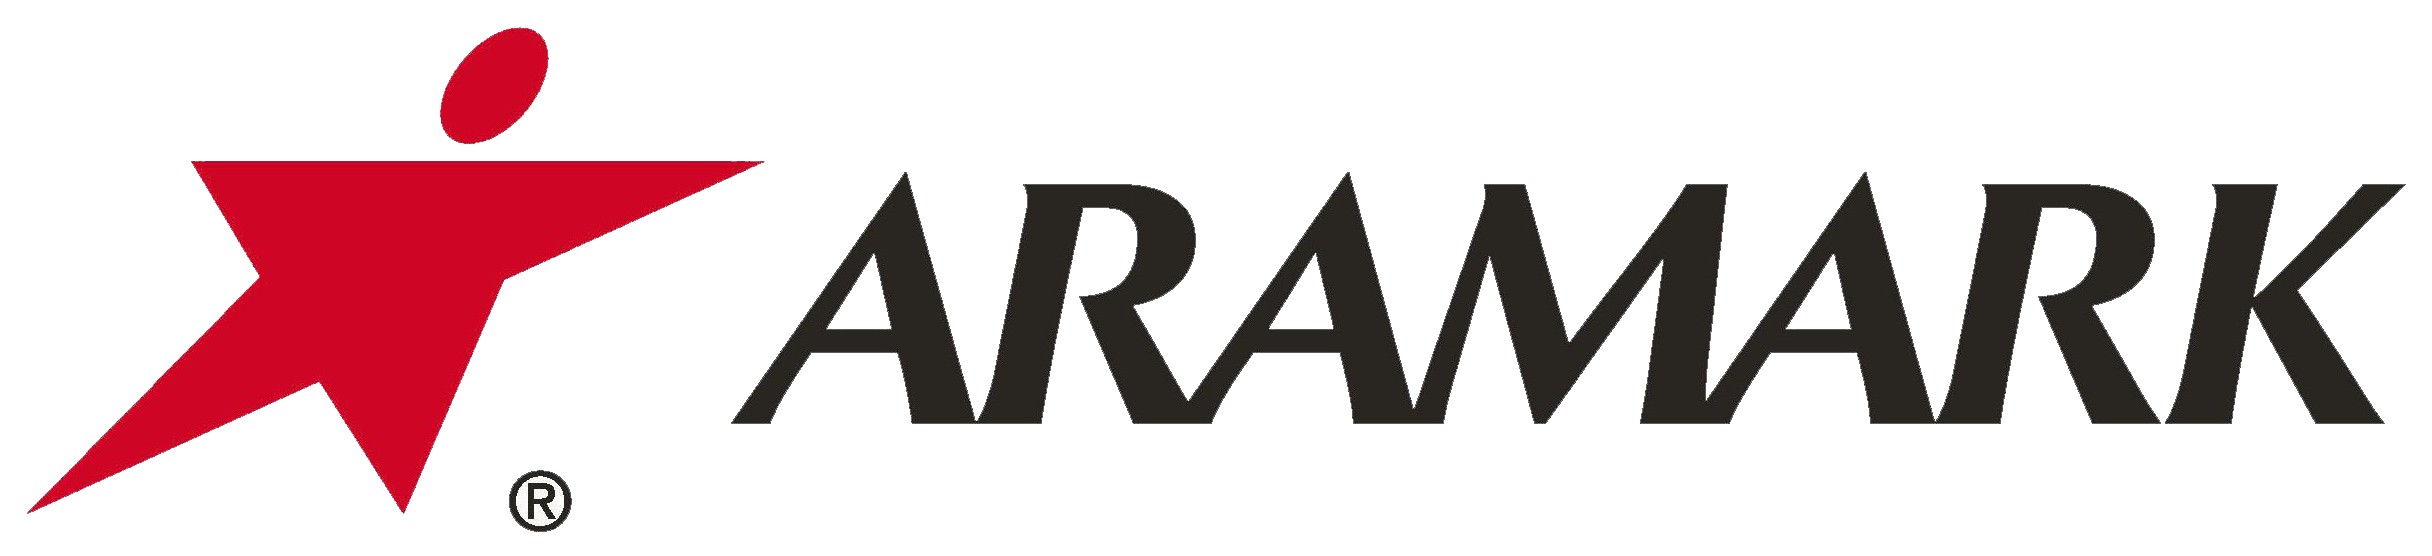 ARAMARK-Logo.png